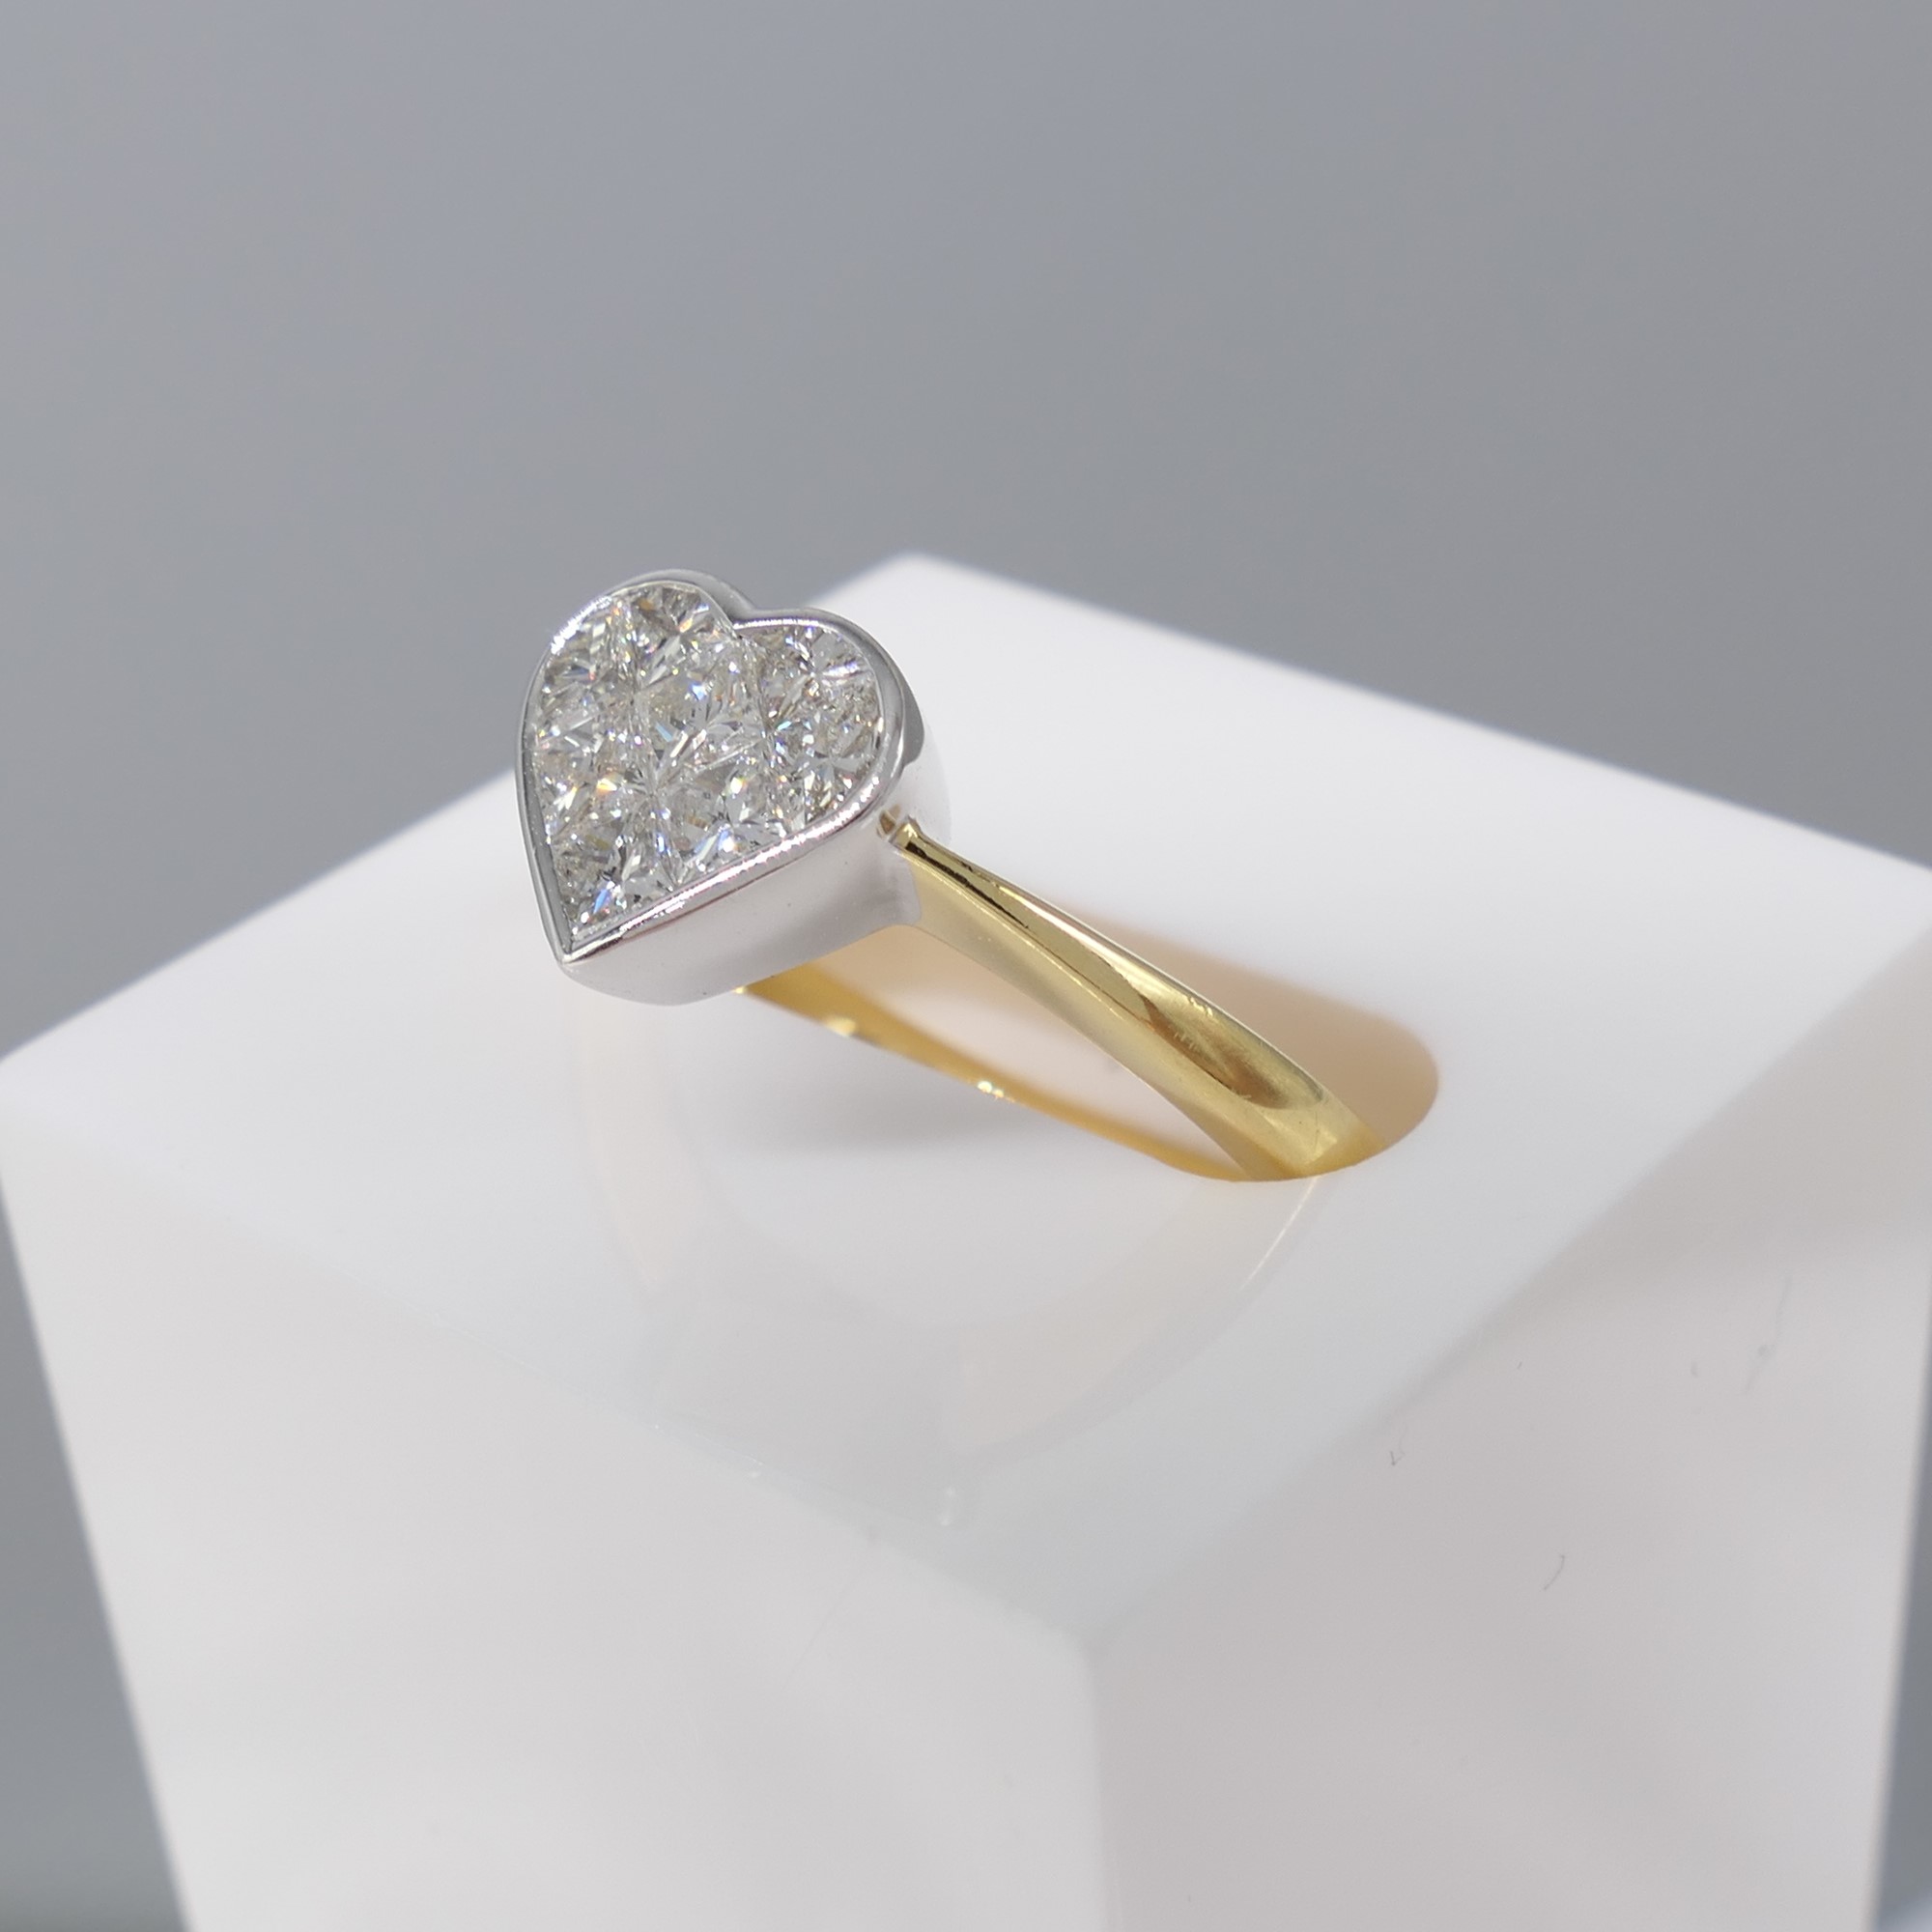 18ct Yellow Gold 0.75 Carat Heart-Shaped Princess-Cut Diamond Ring - Image 5 of 7